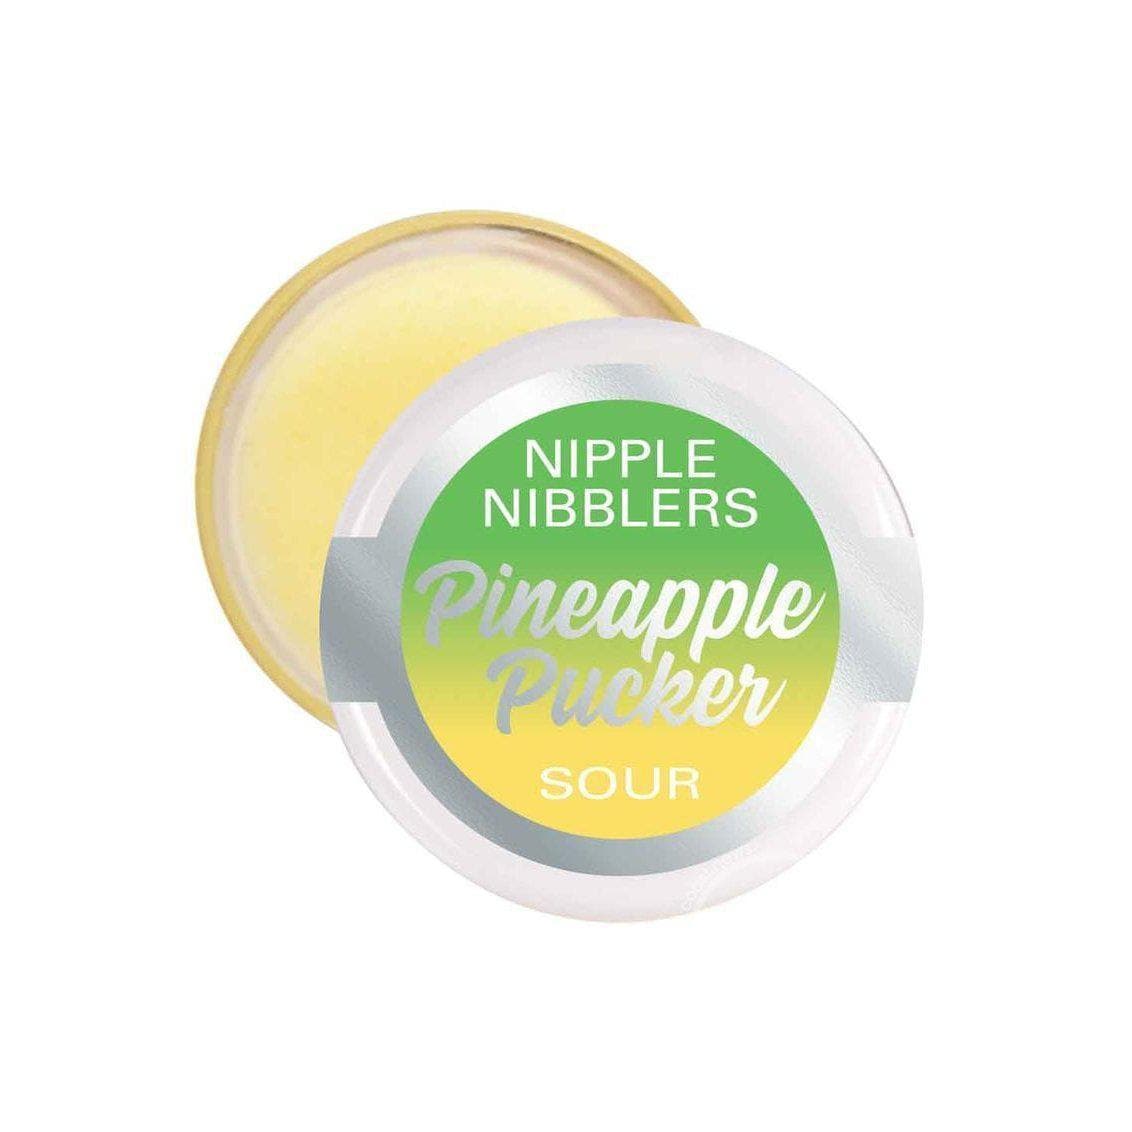 Jelique Nipple Nibblers Sour Tingle Pleasure Balm Pineapple Pucker 3 gm - Romantic Blessings